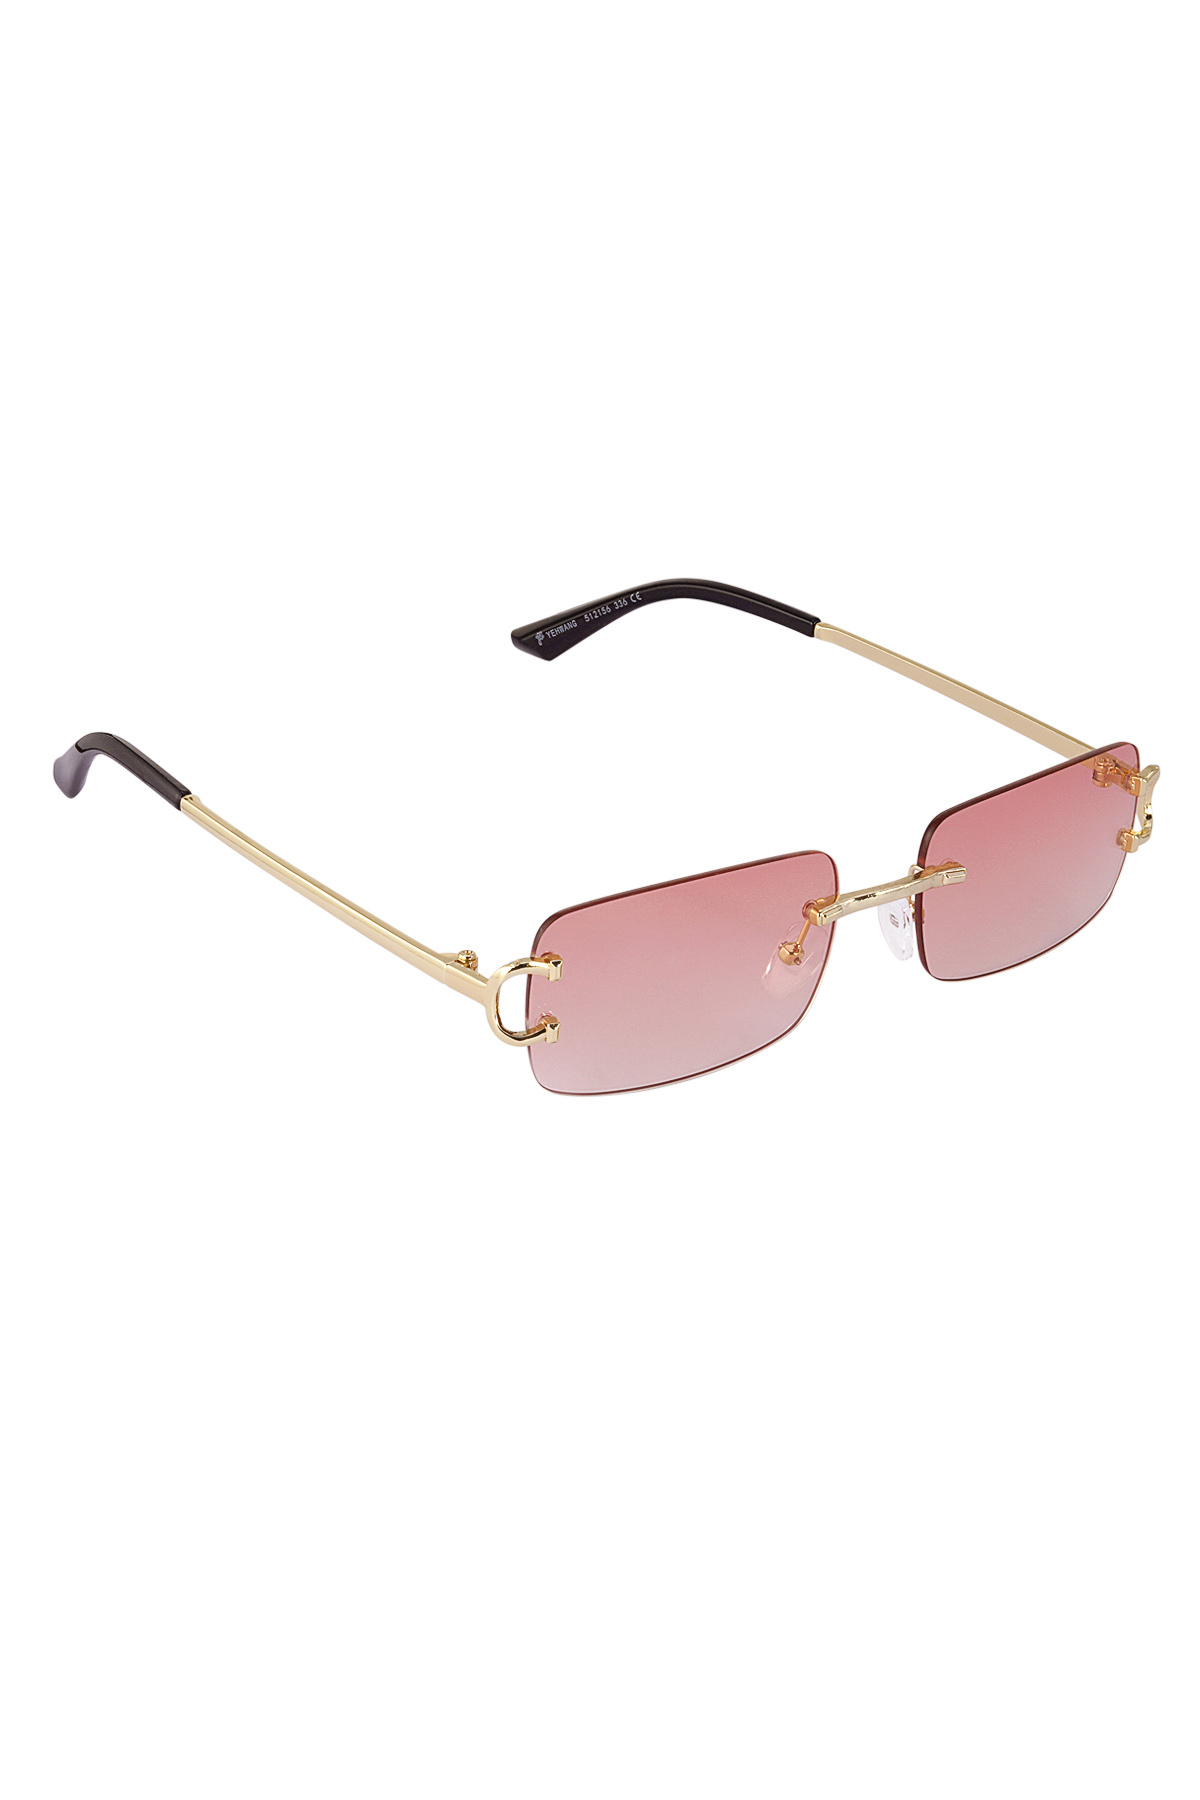 Sunbeam Sunglasses - rose gold